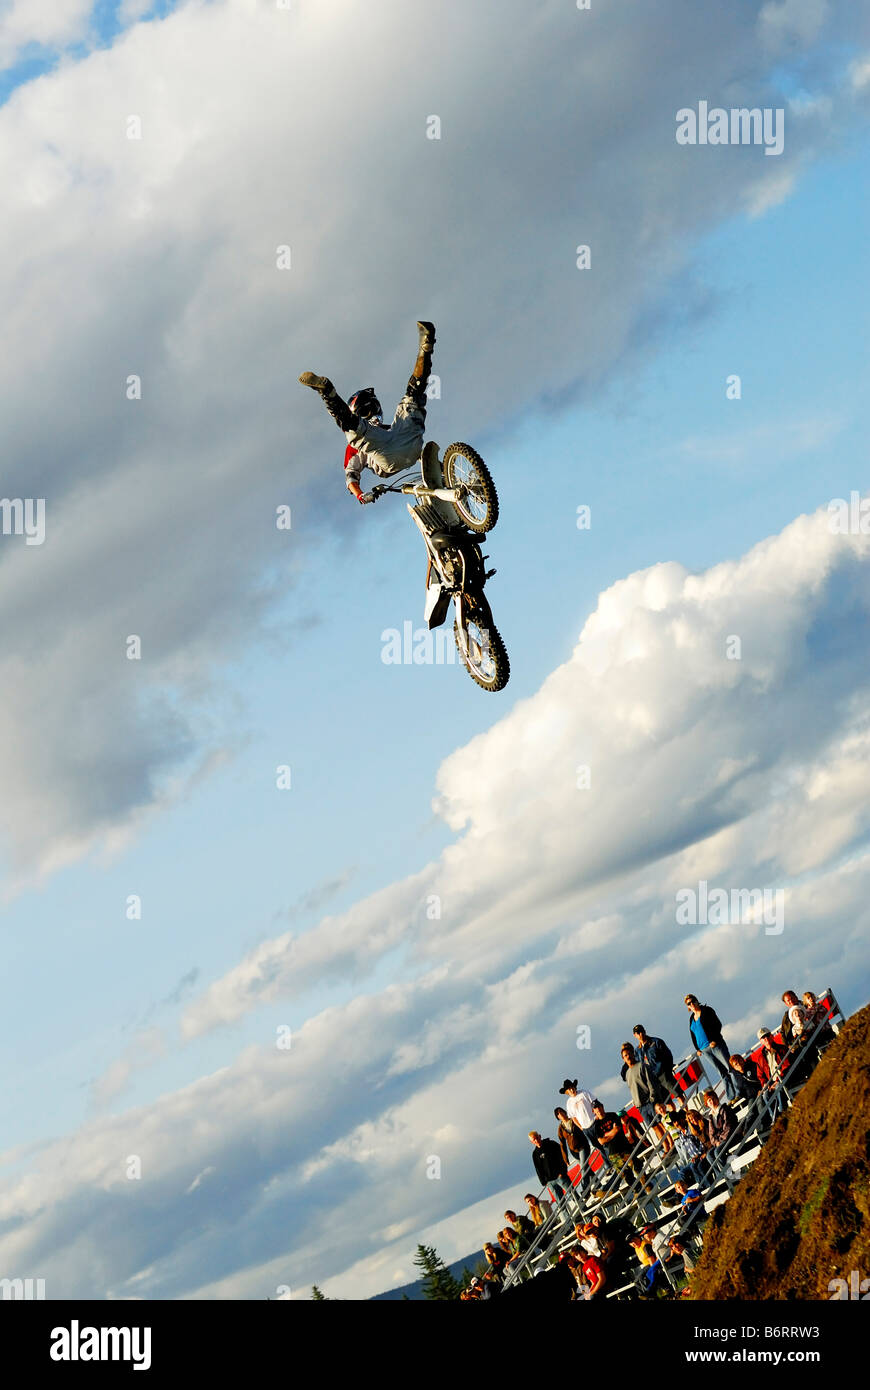 Motocross rider 0811 Stock Photo